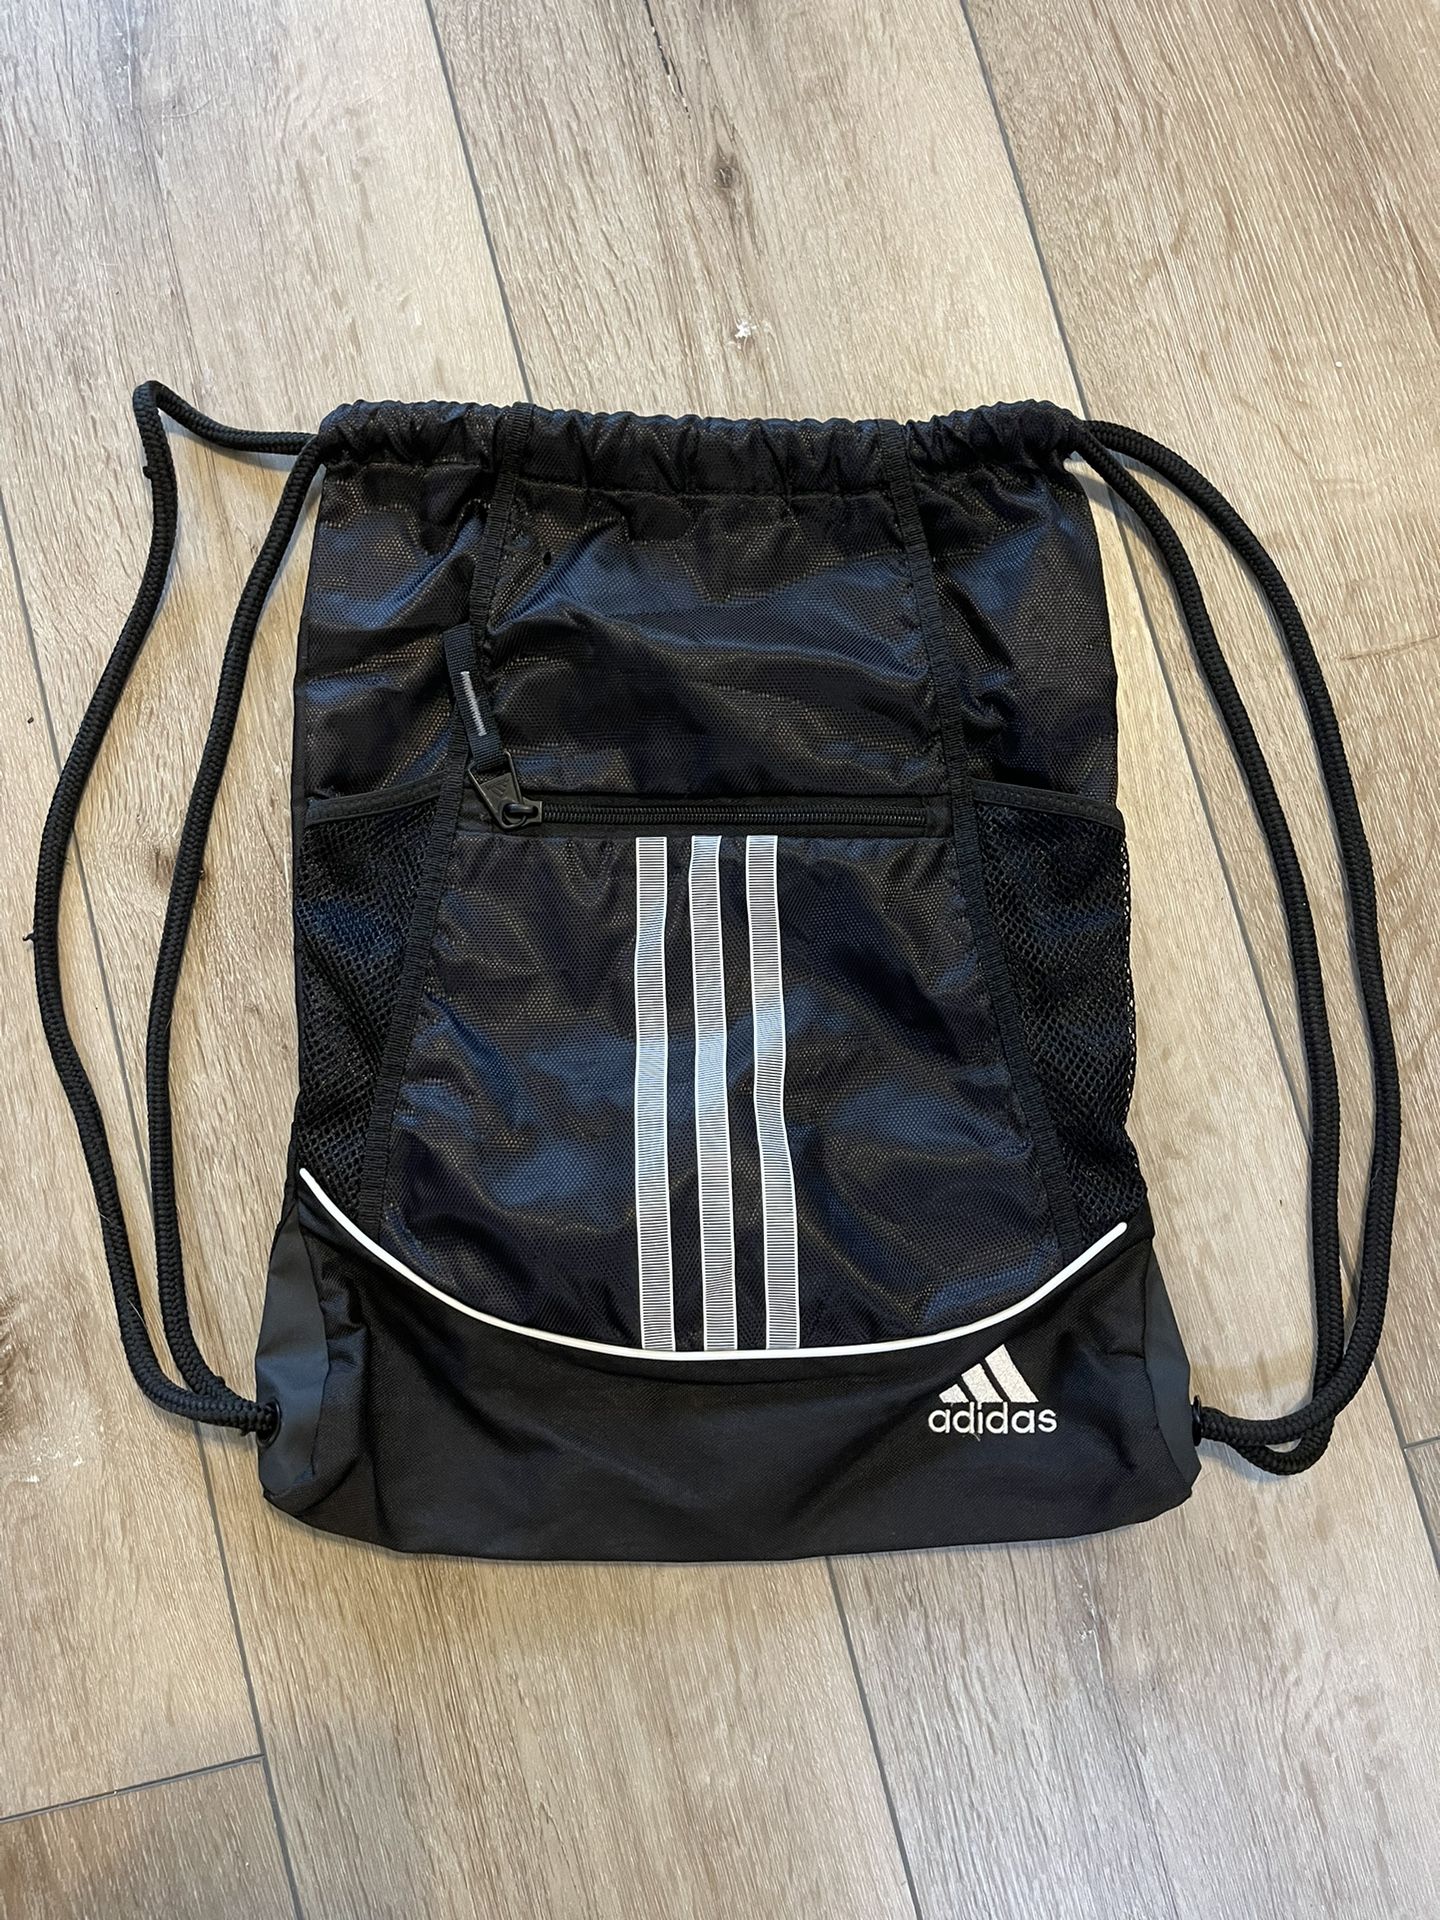 Adidas String Backpack